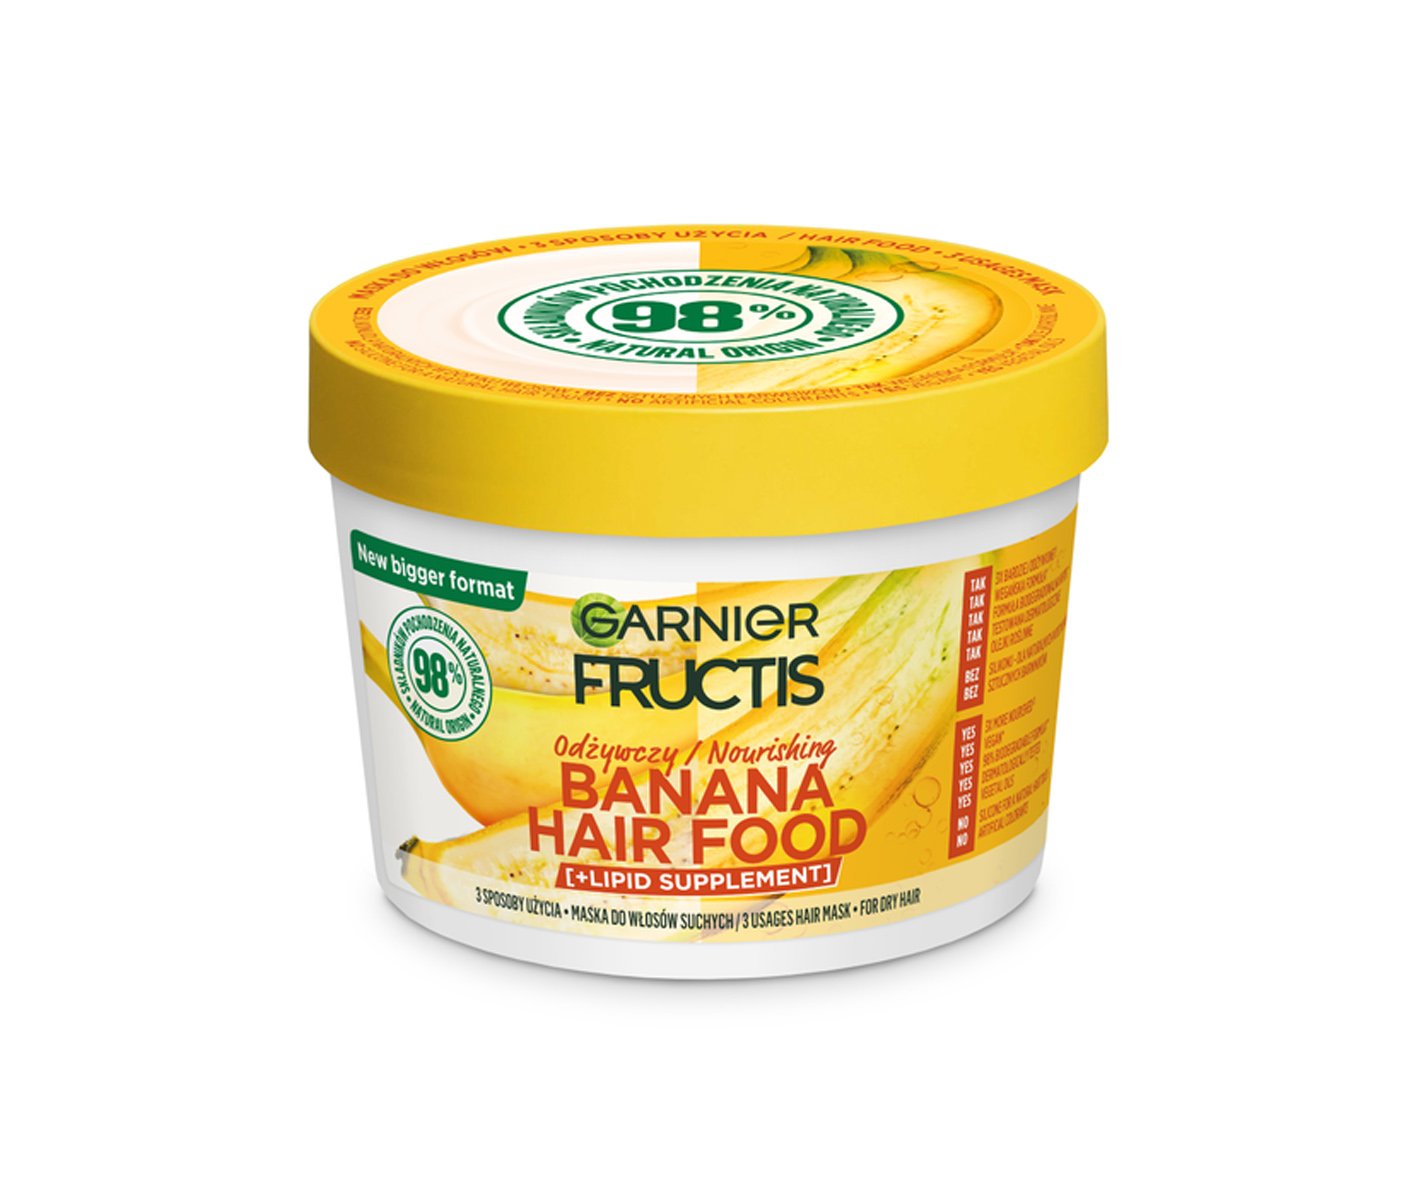 Garnier Fructis, Banana Hair Food, masque pour cheveux